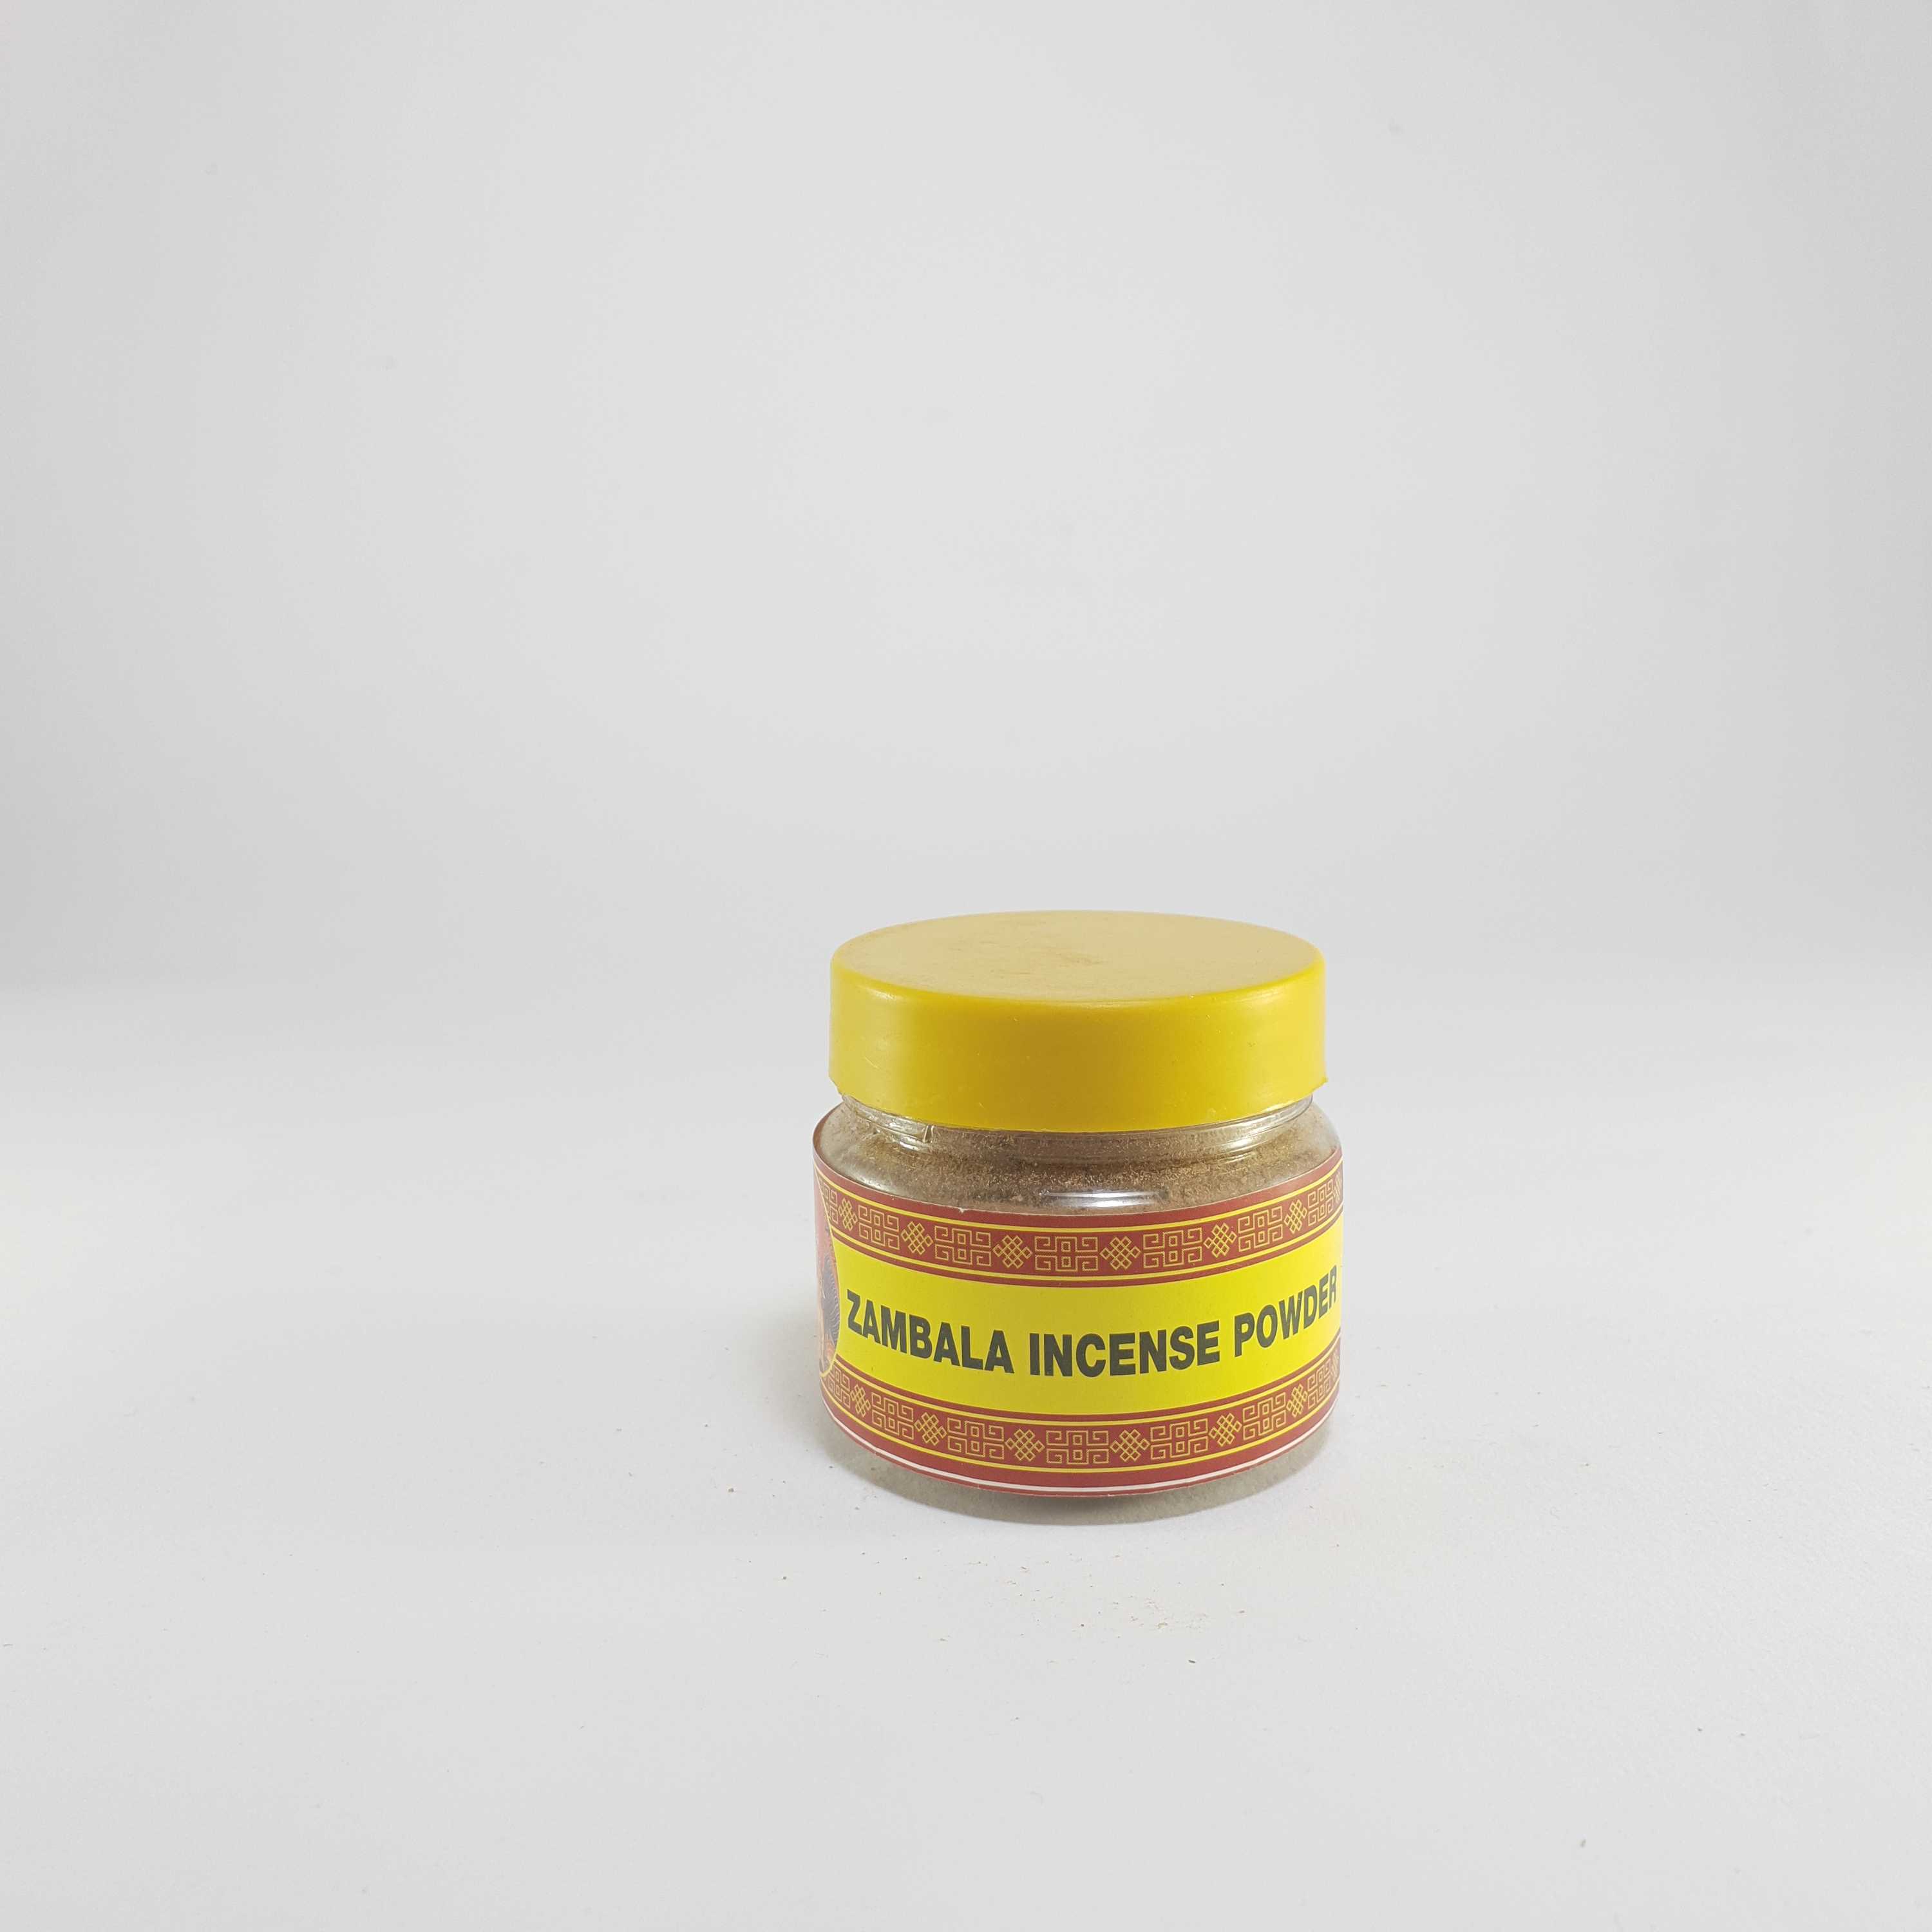 Zambala Incense Powder, in Pet Jar